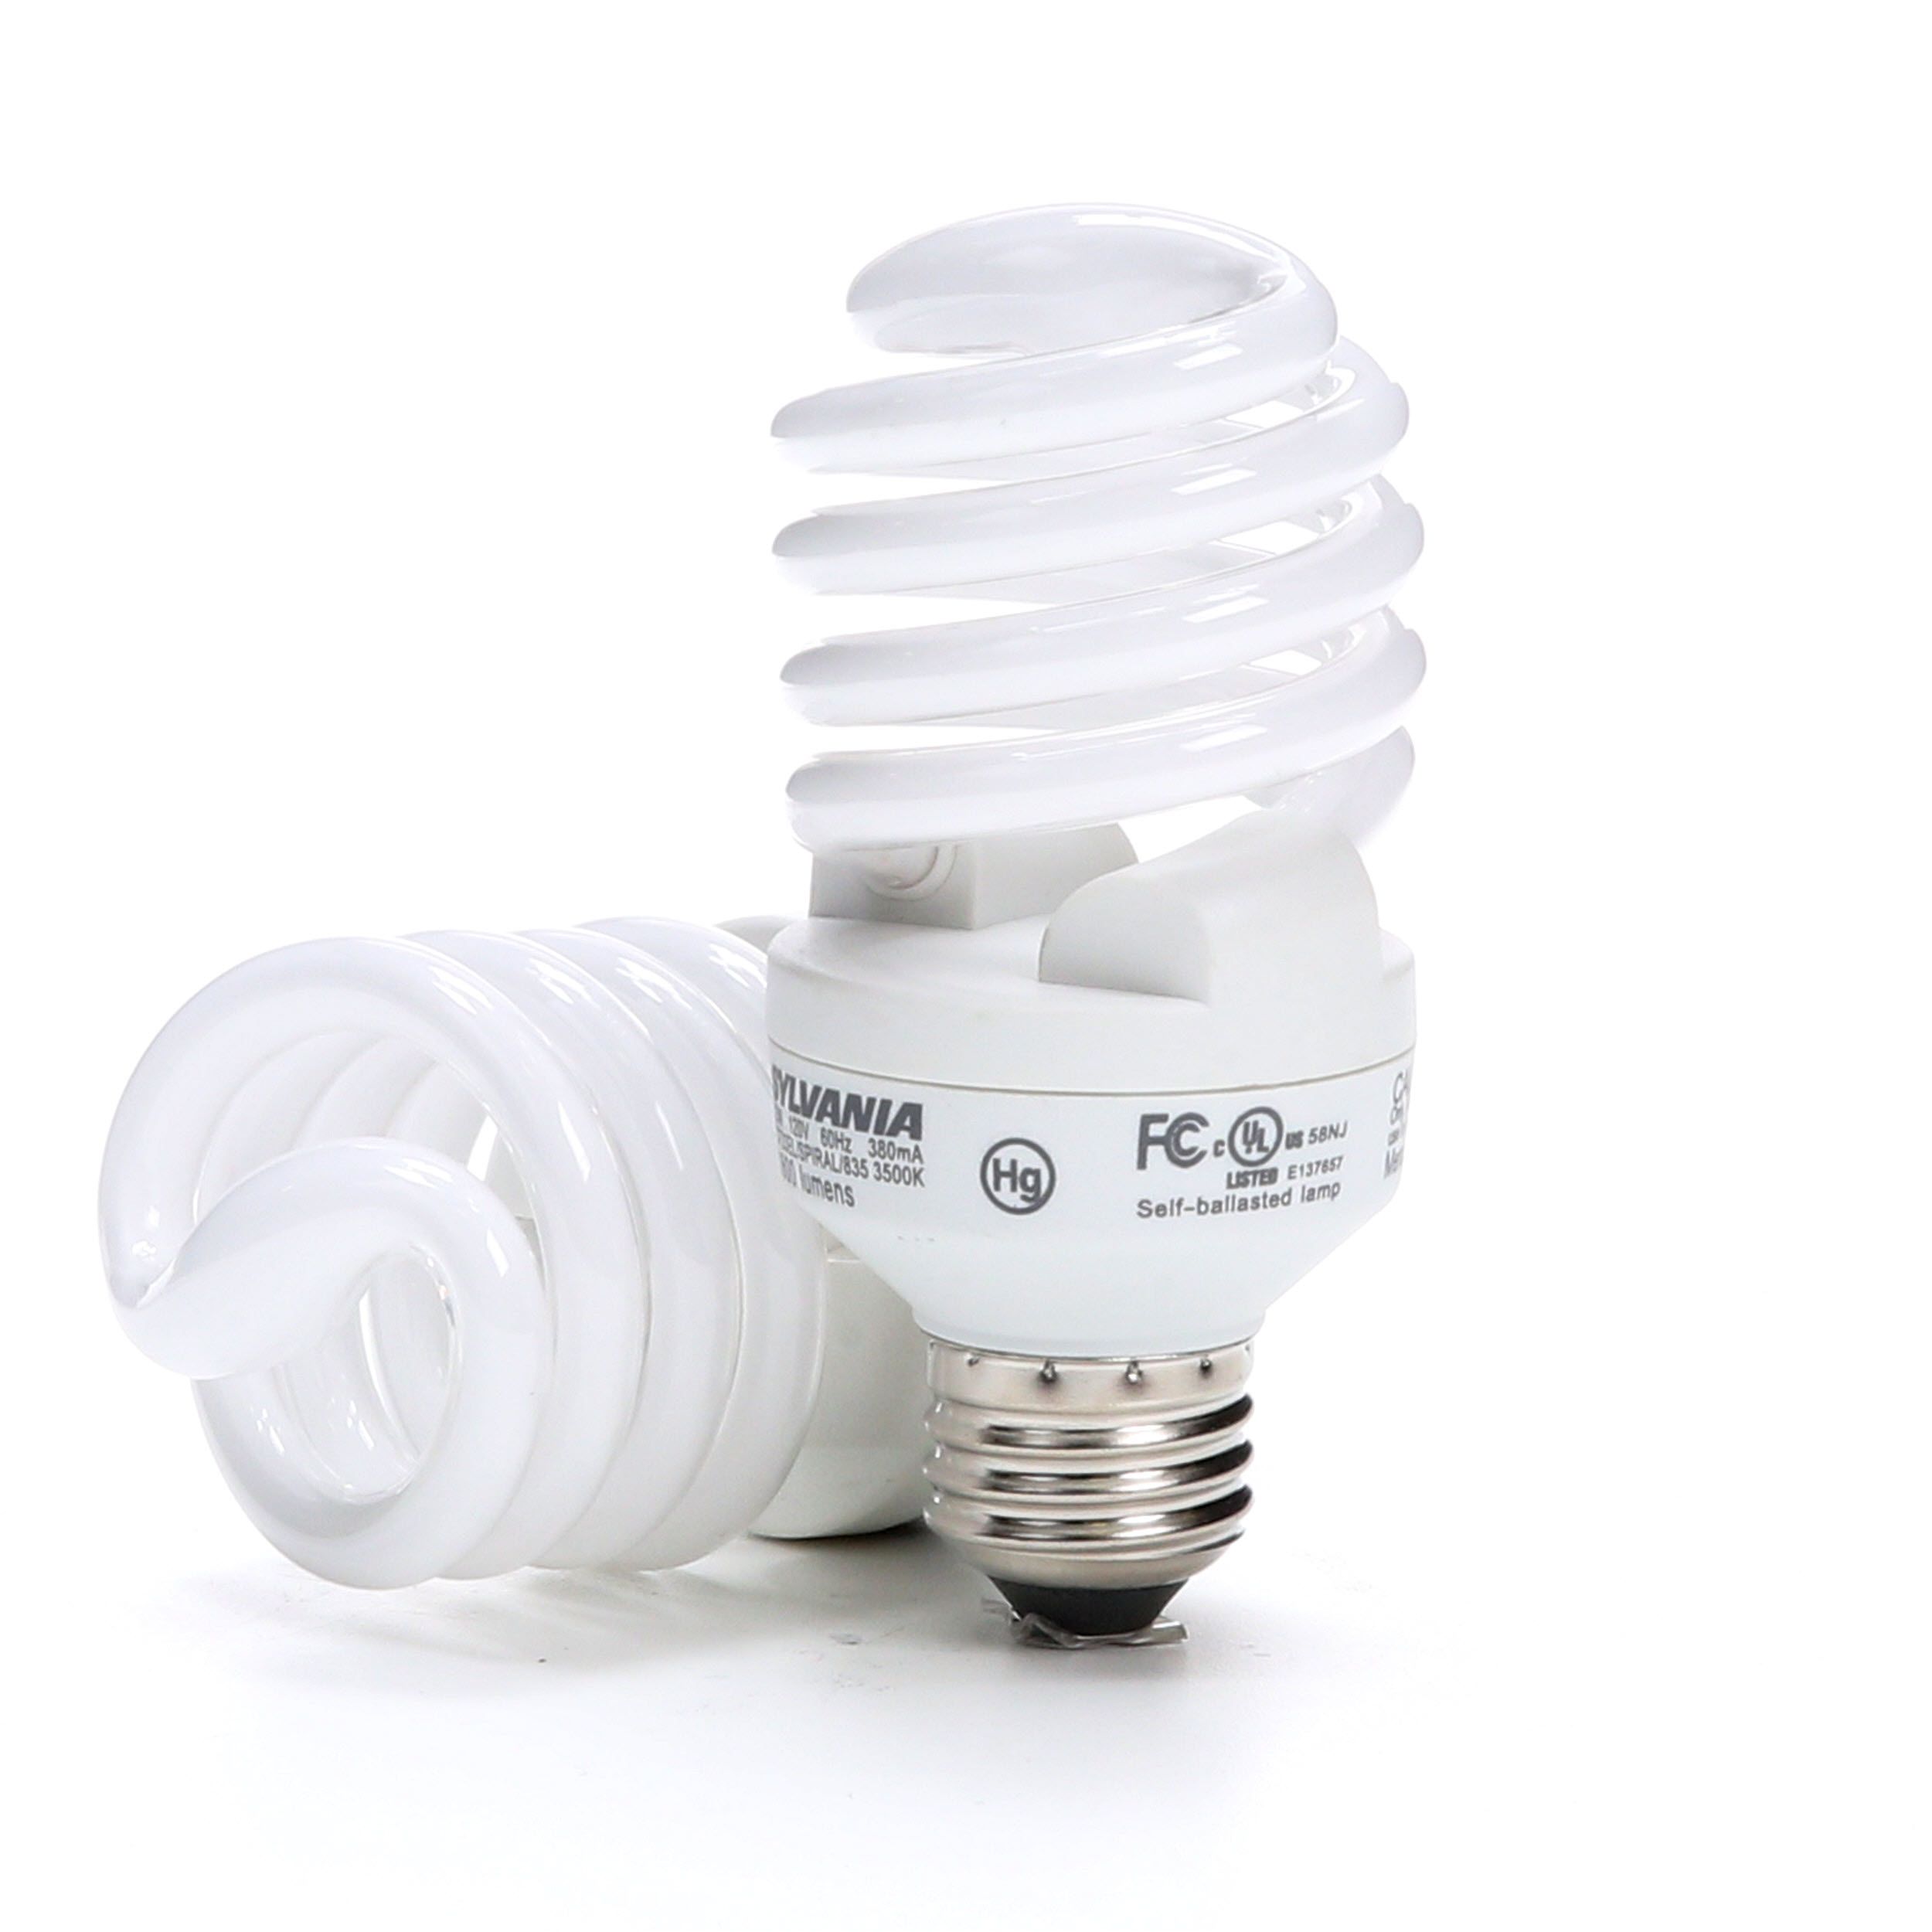 TCP CFL Spring Lamp 100w Equivalent Bright White Light Bulb 3500k for sale online 